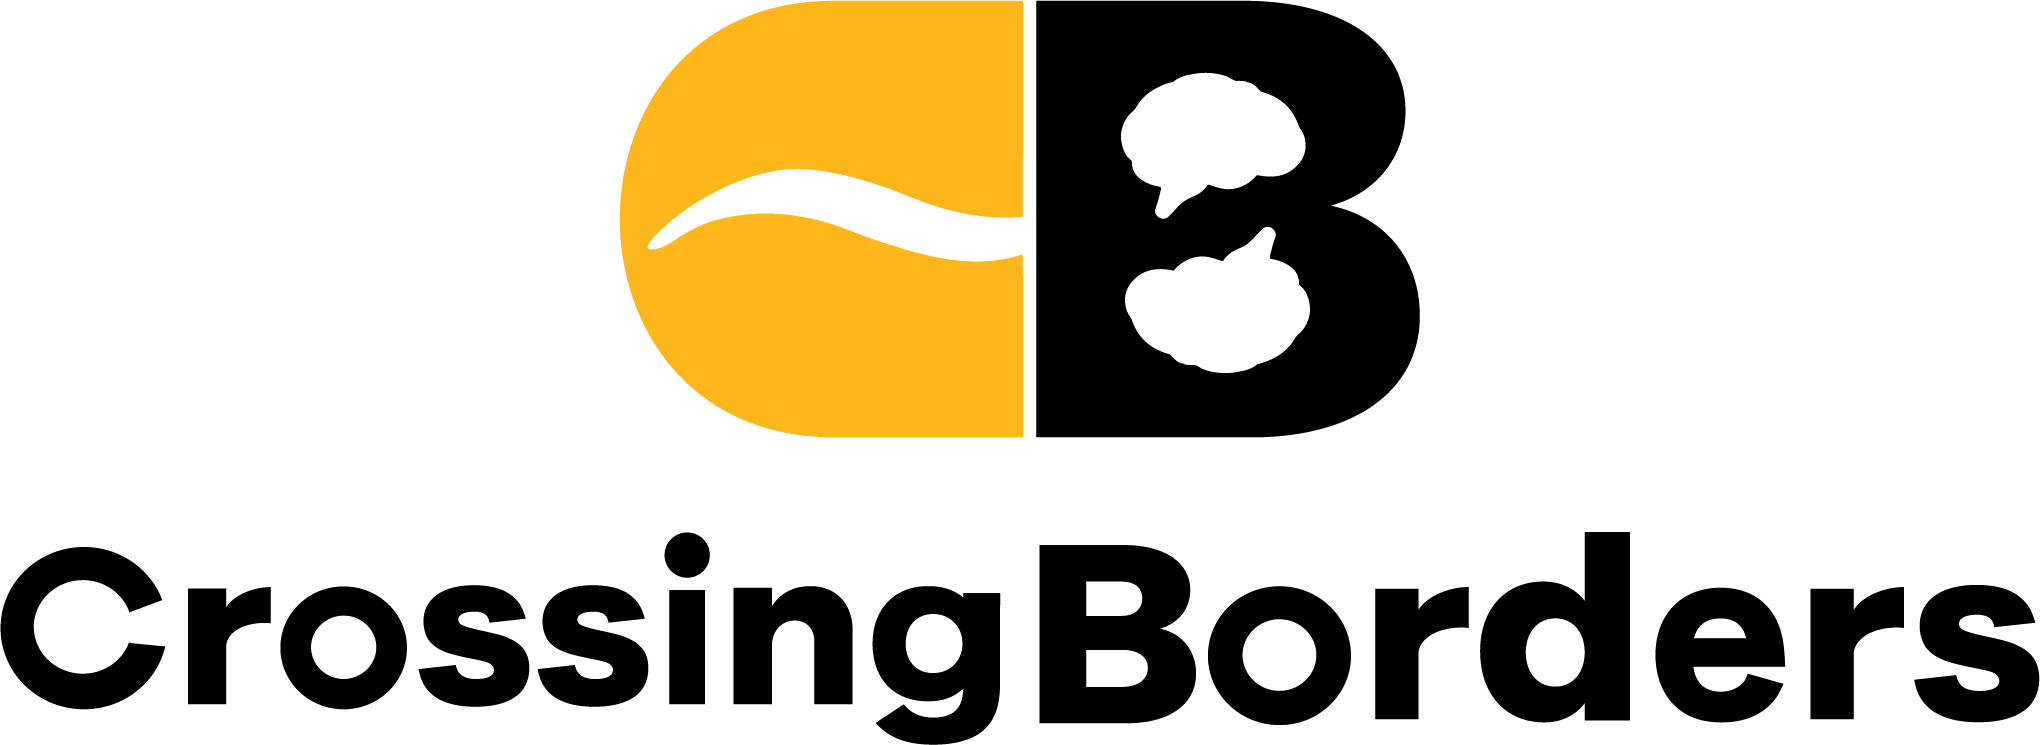 Borders Logo - Crossing Borders